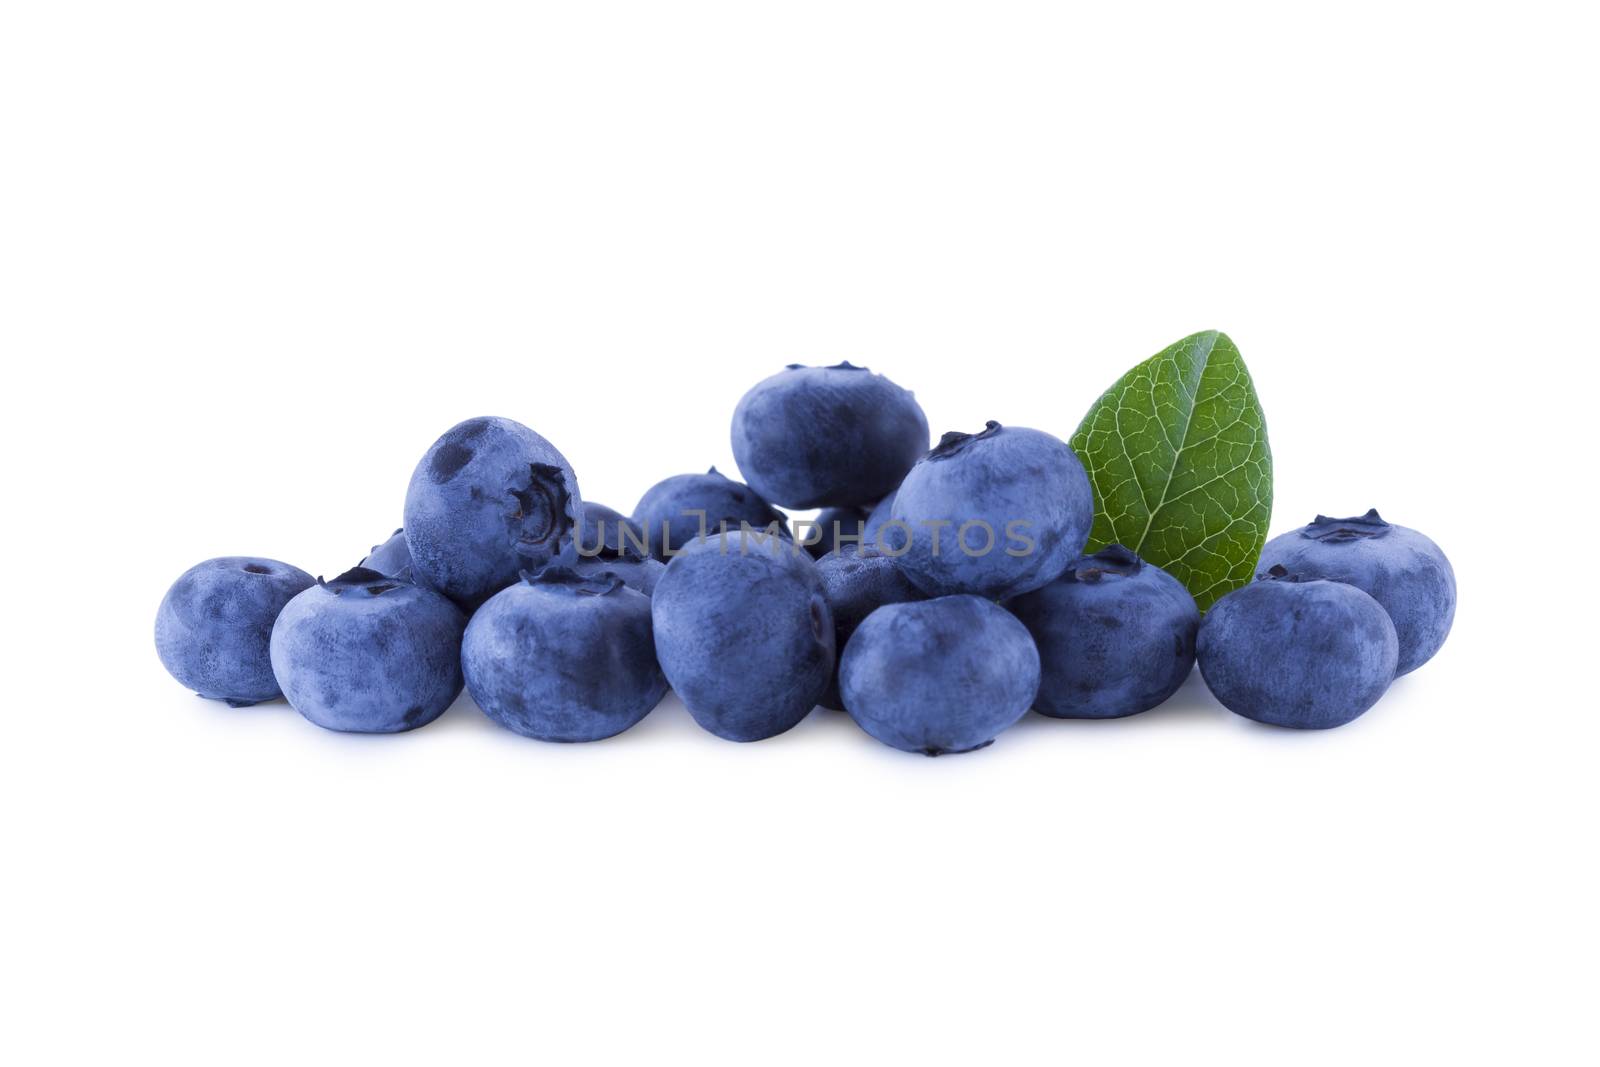 Blueberries isolated on white, fruits by Gbuglok